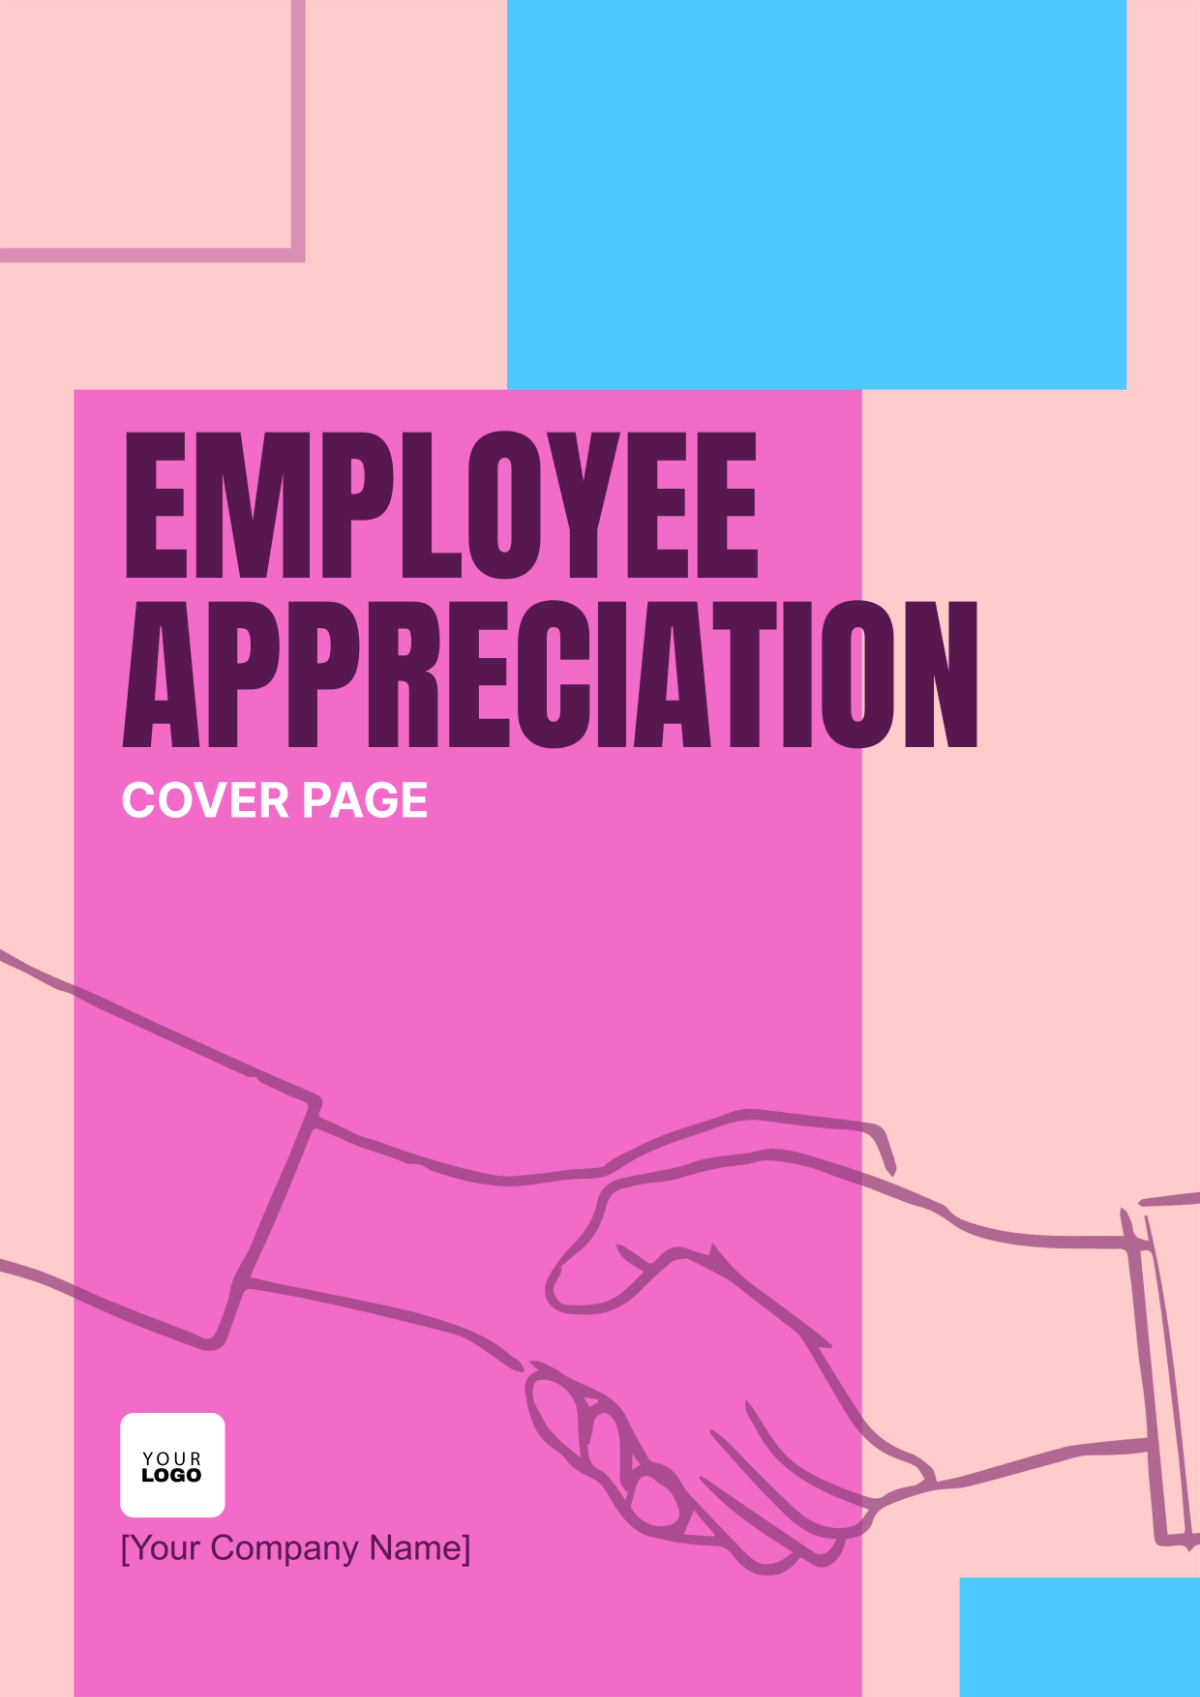 Employee Appreciation Cover Page